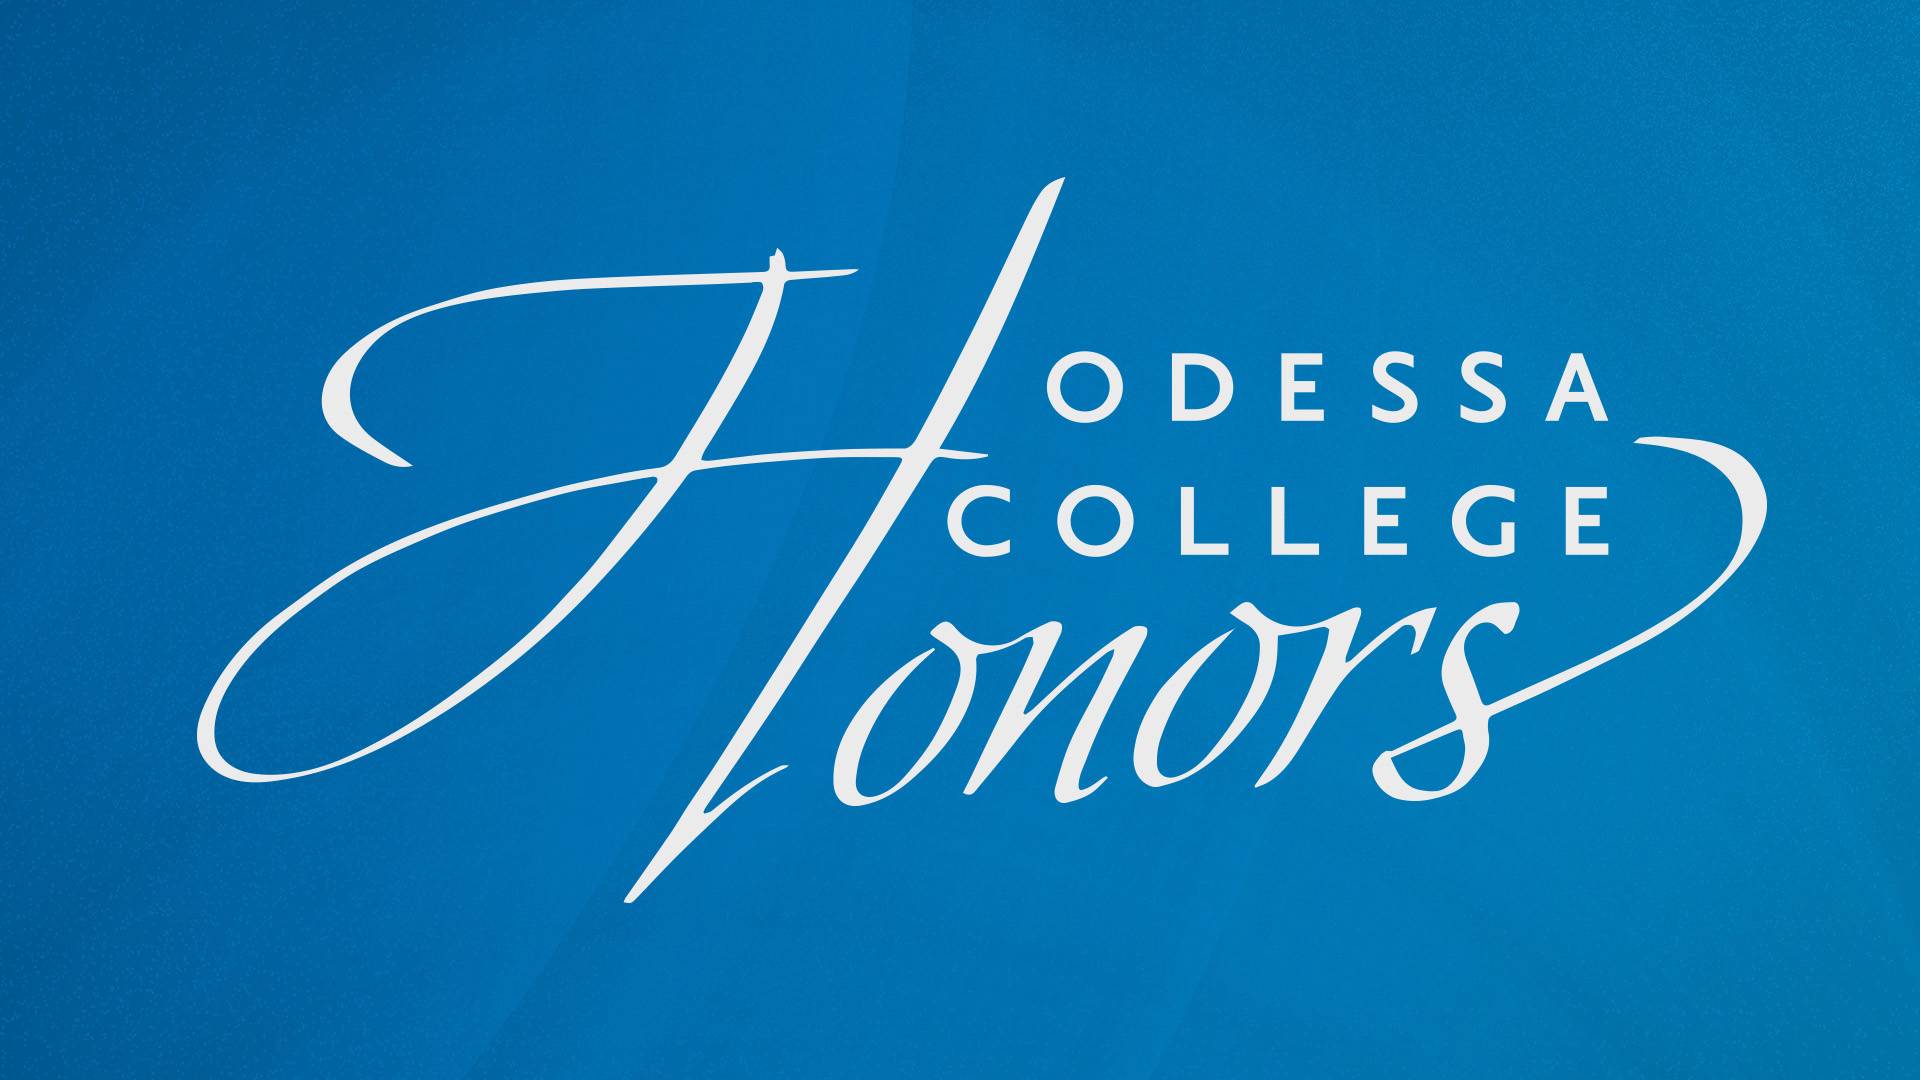 OC Honors Logo